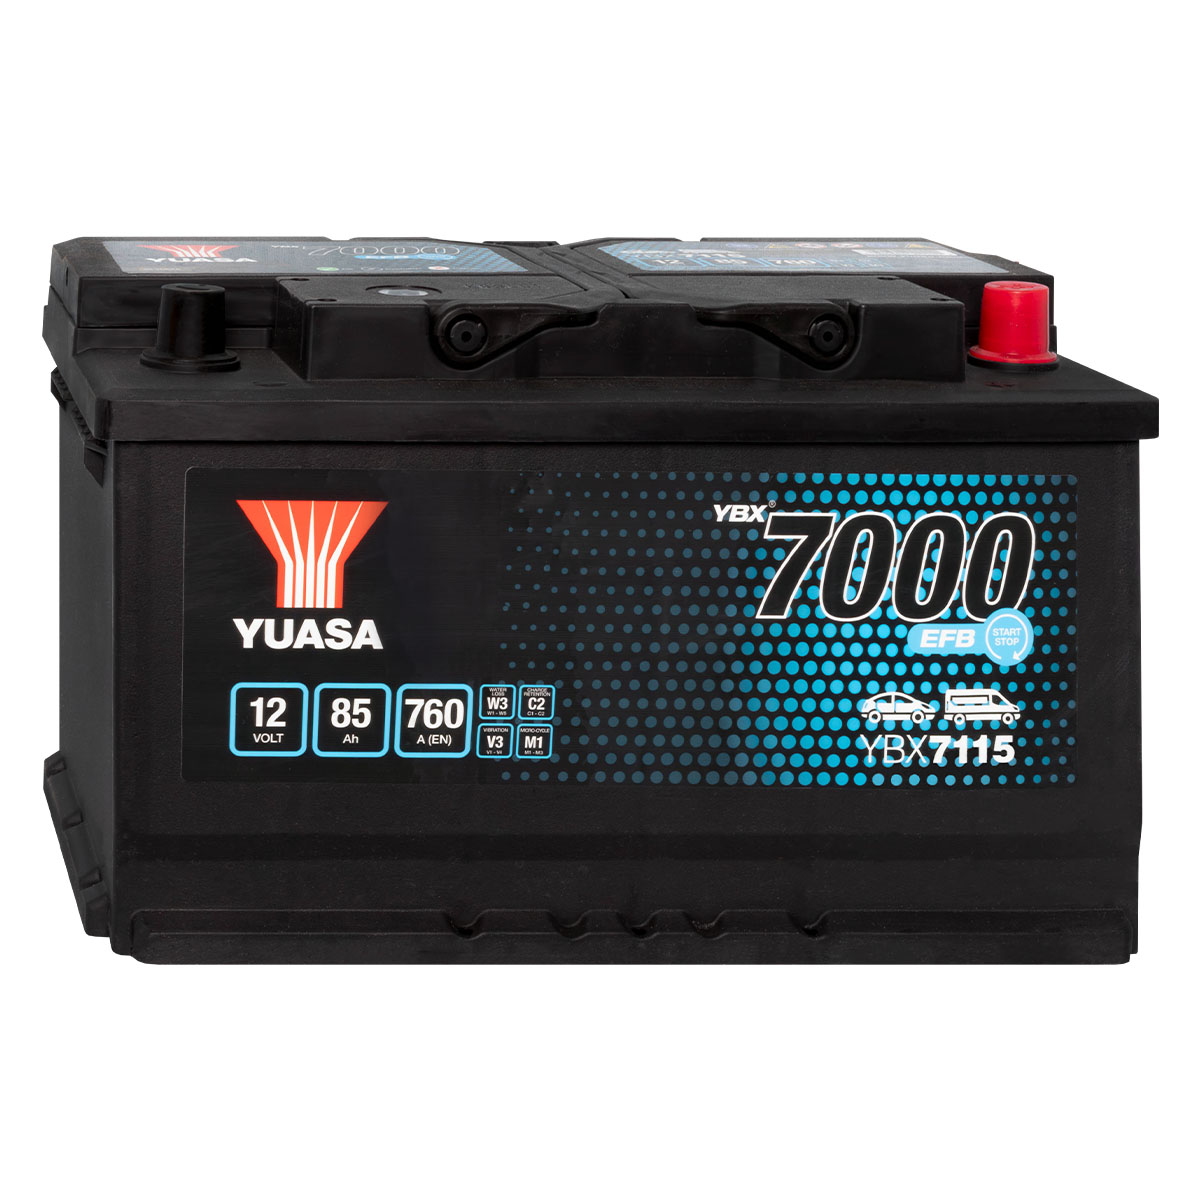 Yuasa YBX7115 EFB 12V 85Ah Autobatterie